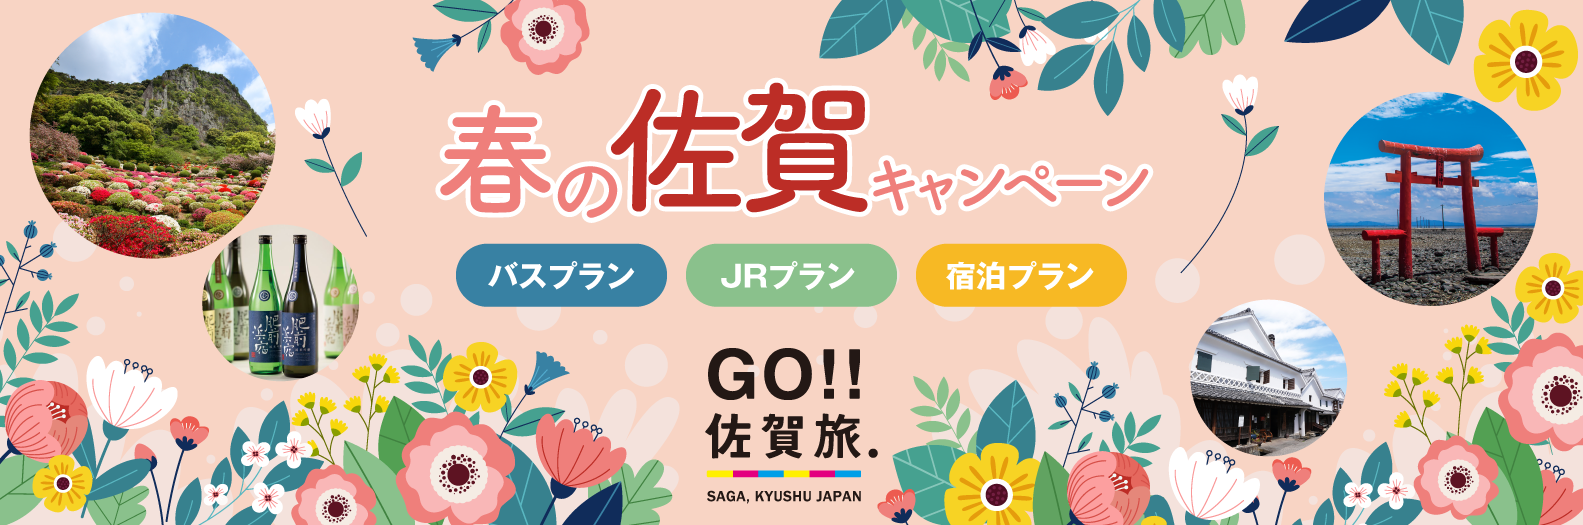 GO!!佐賀旅 春のキャンペーン特集